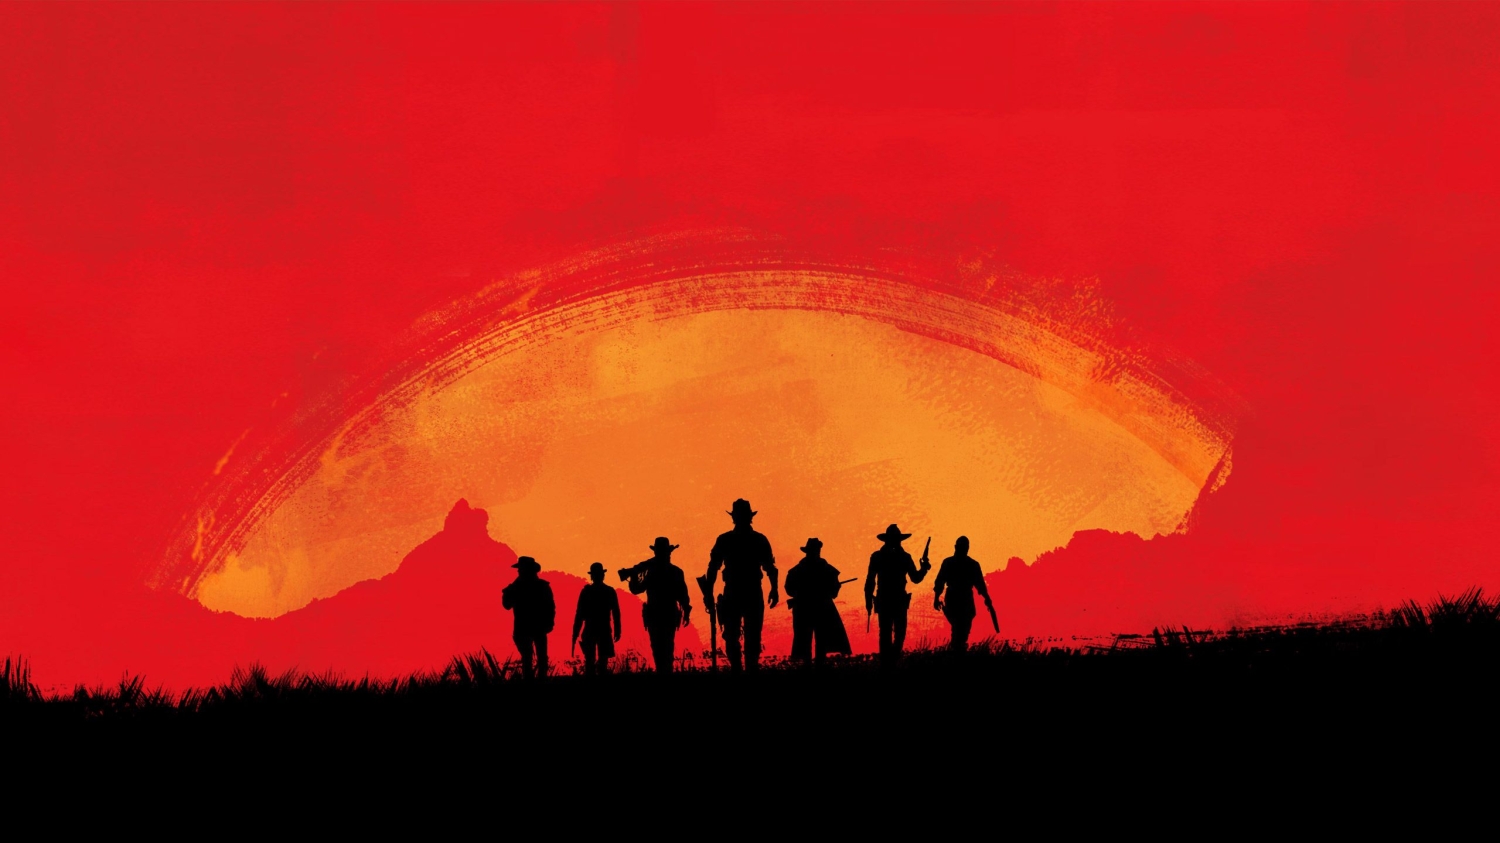 Red Dead Redemption 2 PS5 vs Xbox Series X Graphics Comparison 